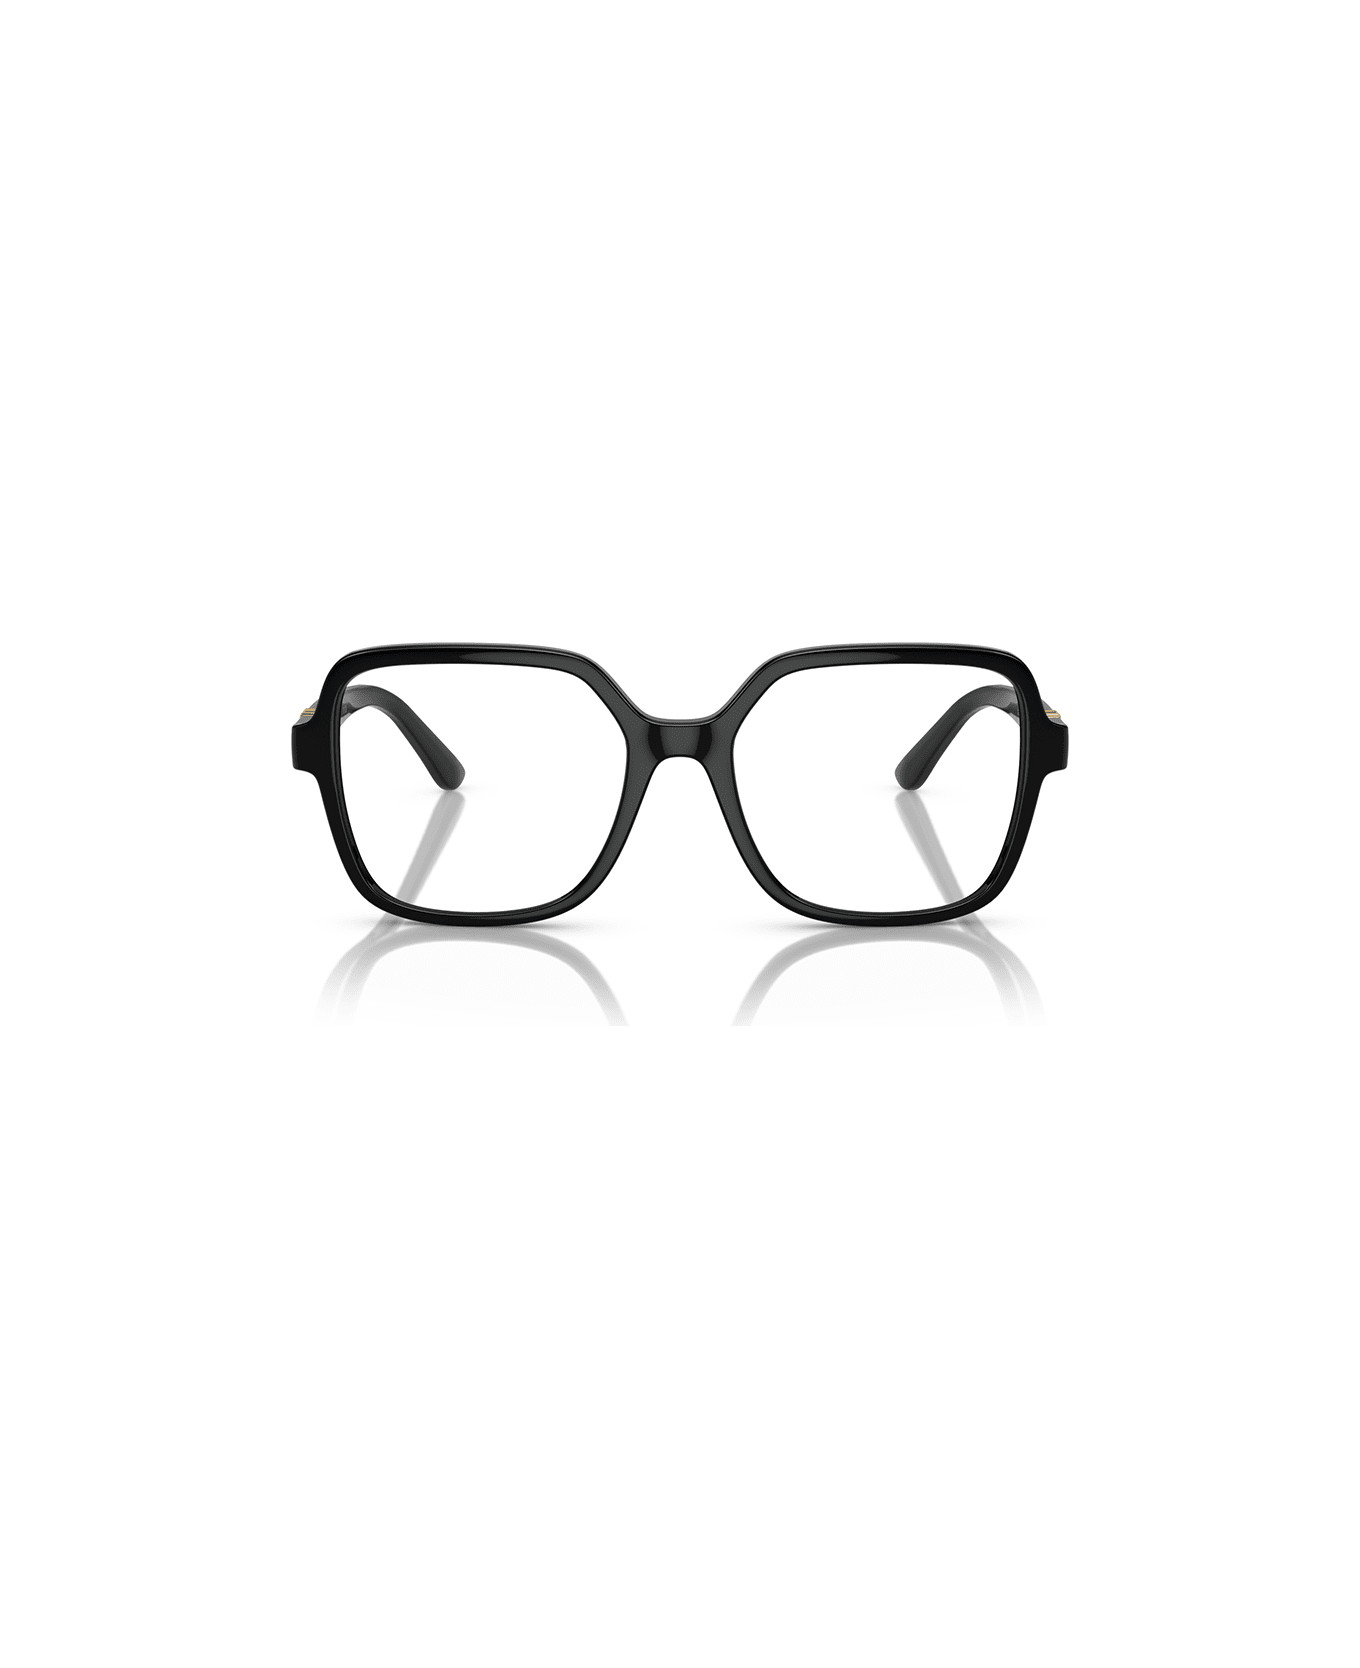 Dolce & Gabbana Eyewear Glasses - Nero アイウェア